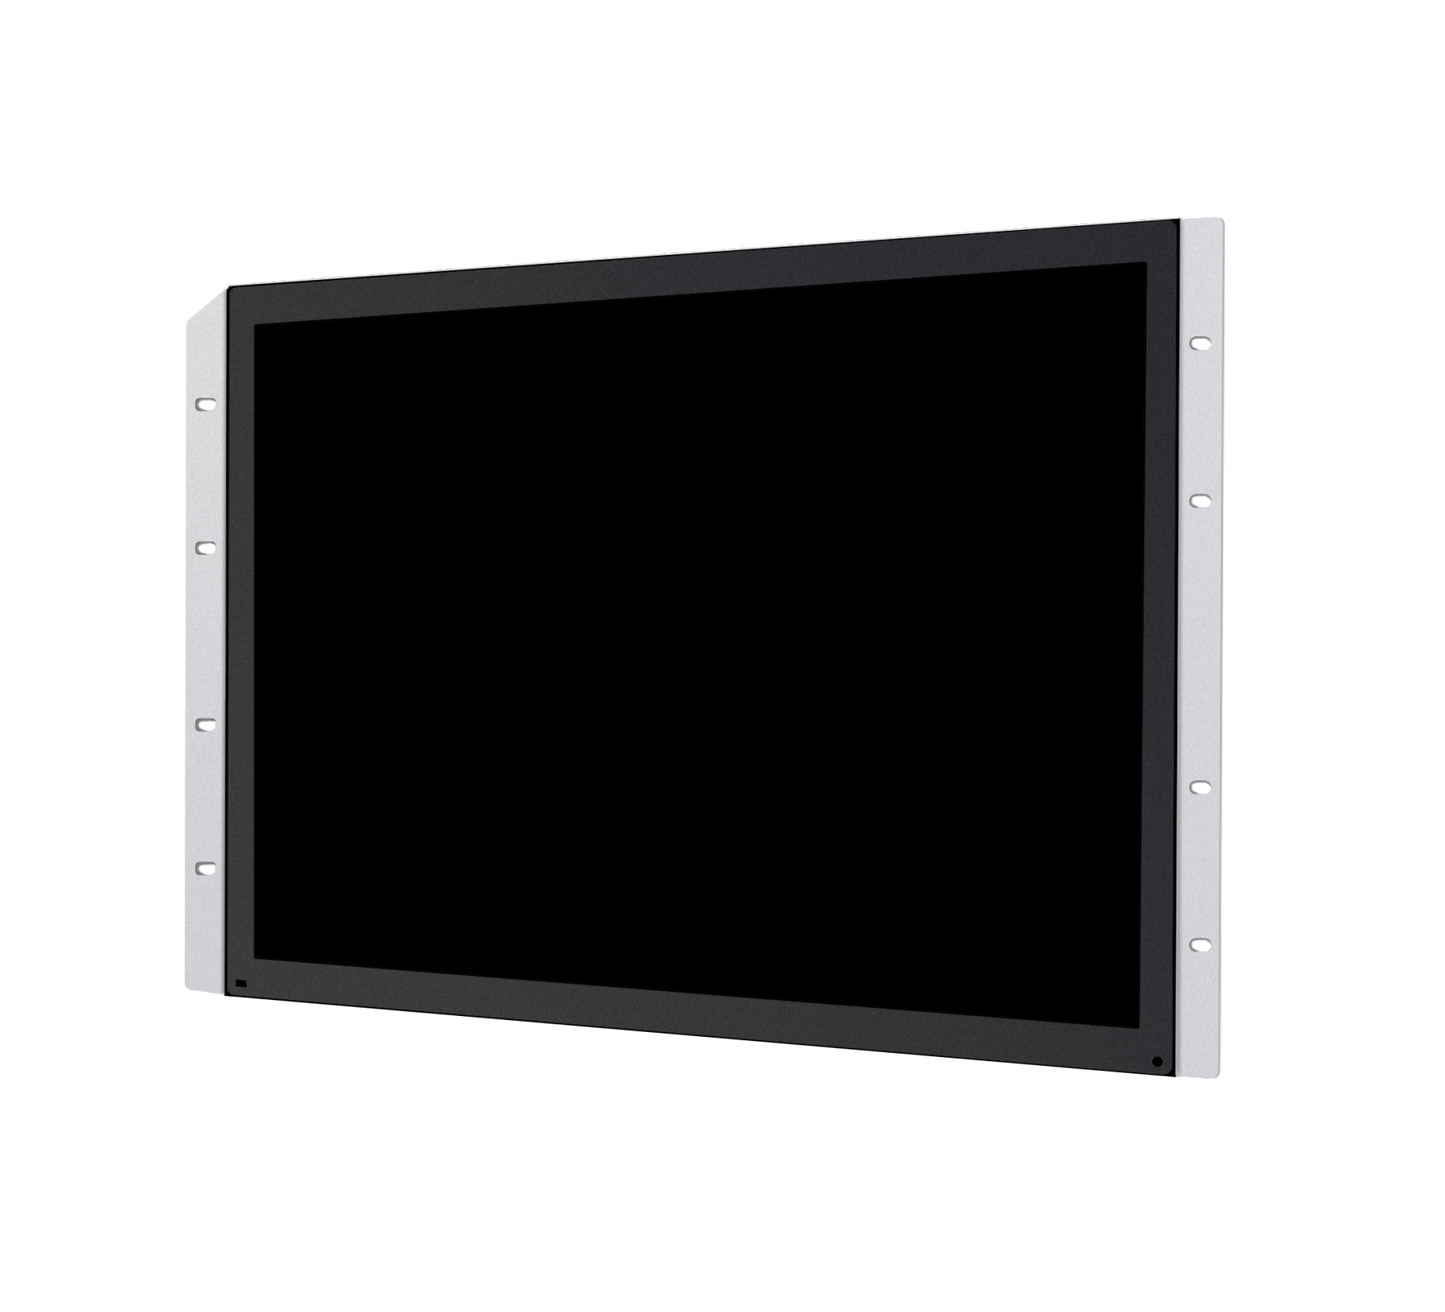 ULM17 UNICO PHOENIX SERIES OF ARCADE CRT REPLACEMENT LCD MONITORS